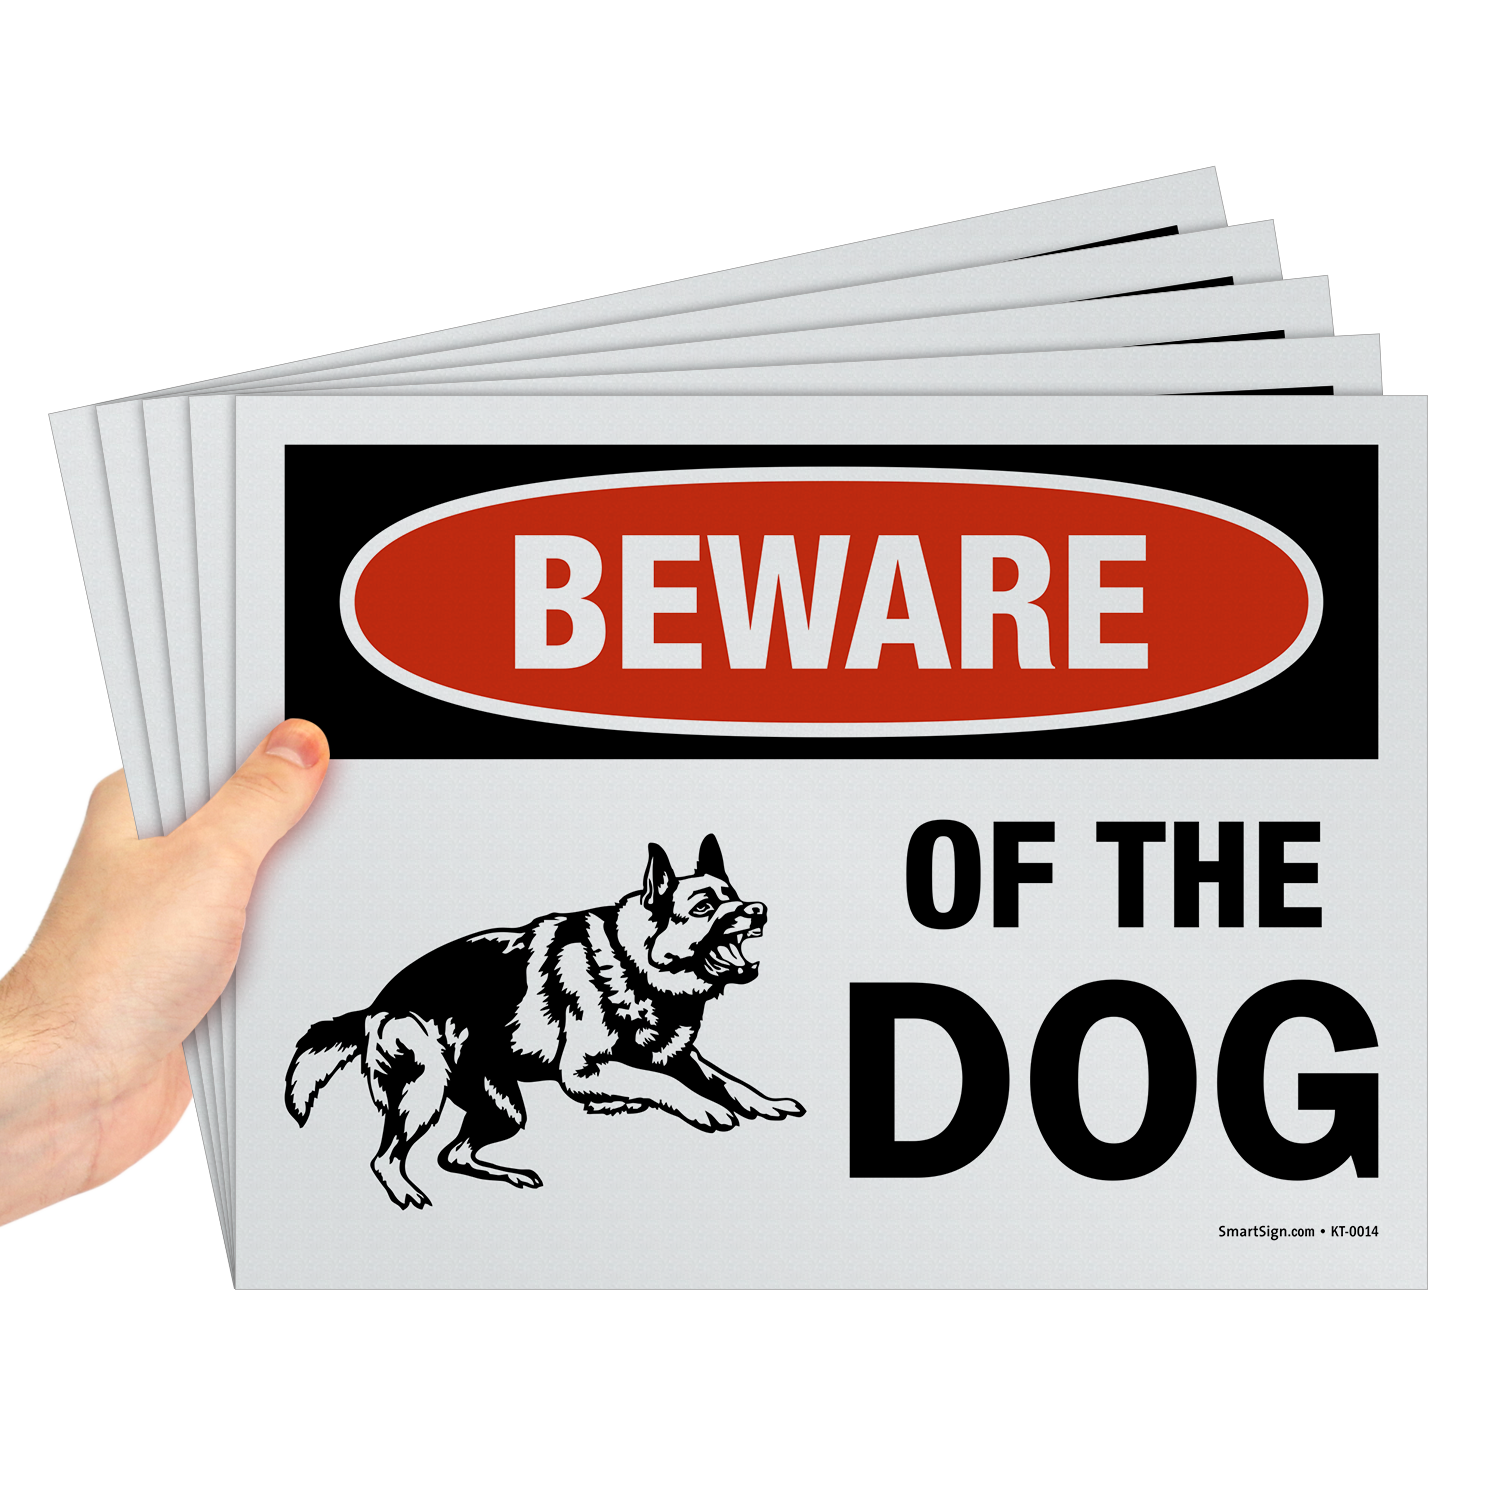 beware of dog sign